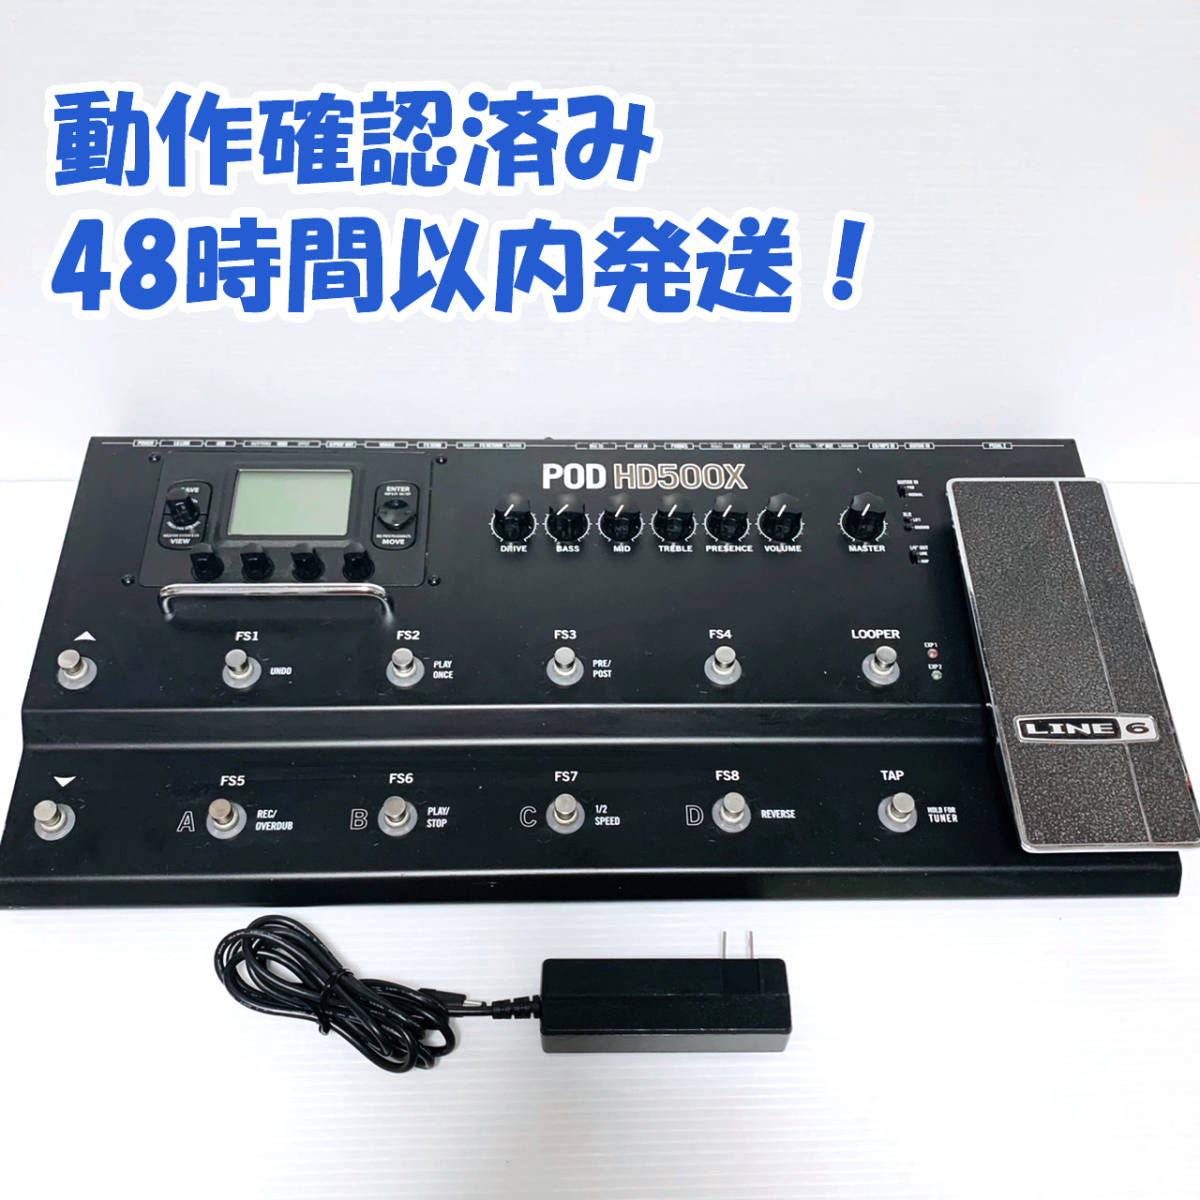 Rakuten 公式通販 Line 6 マルチエフェクトプロセッサー POD HD500X ラインシックス cloudeyecontrol.com cloudeyecontrol.com